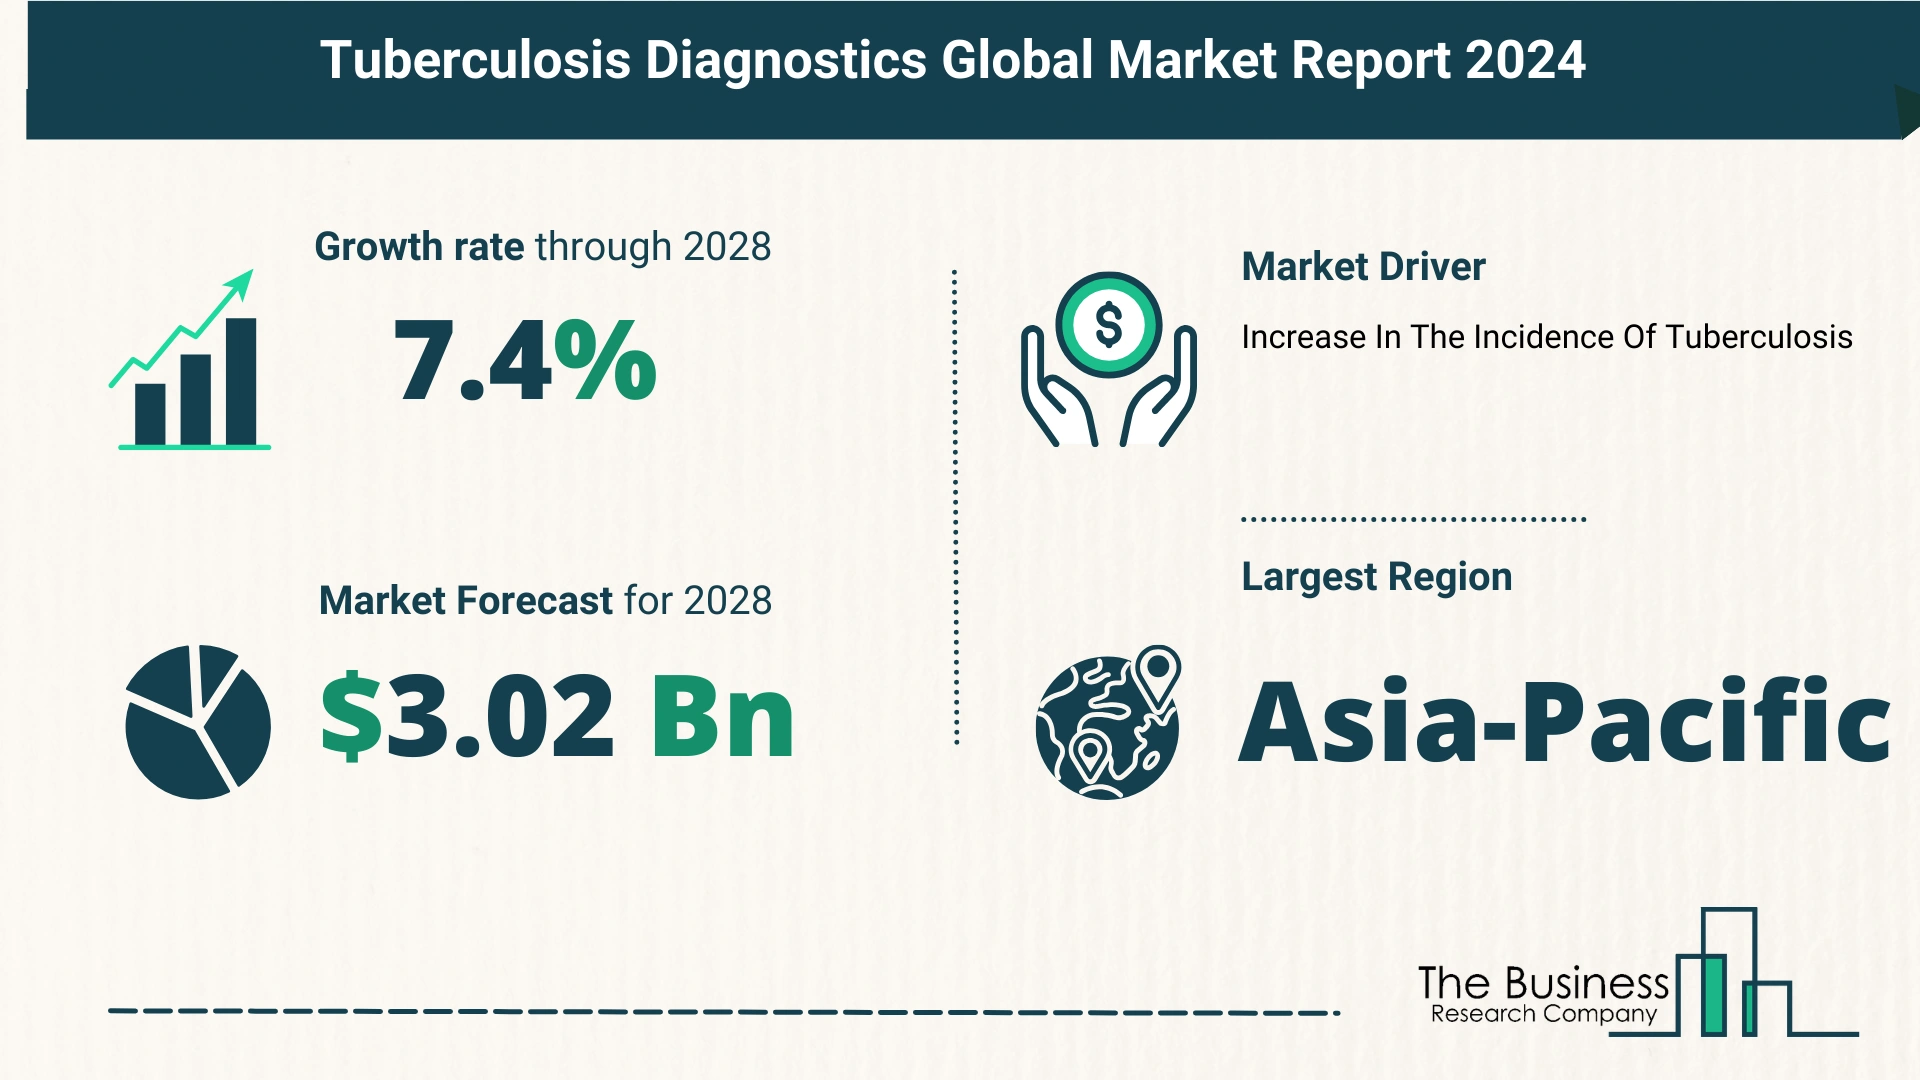 Global Tuberculosis Diagnostics Market